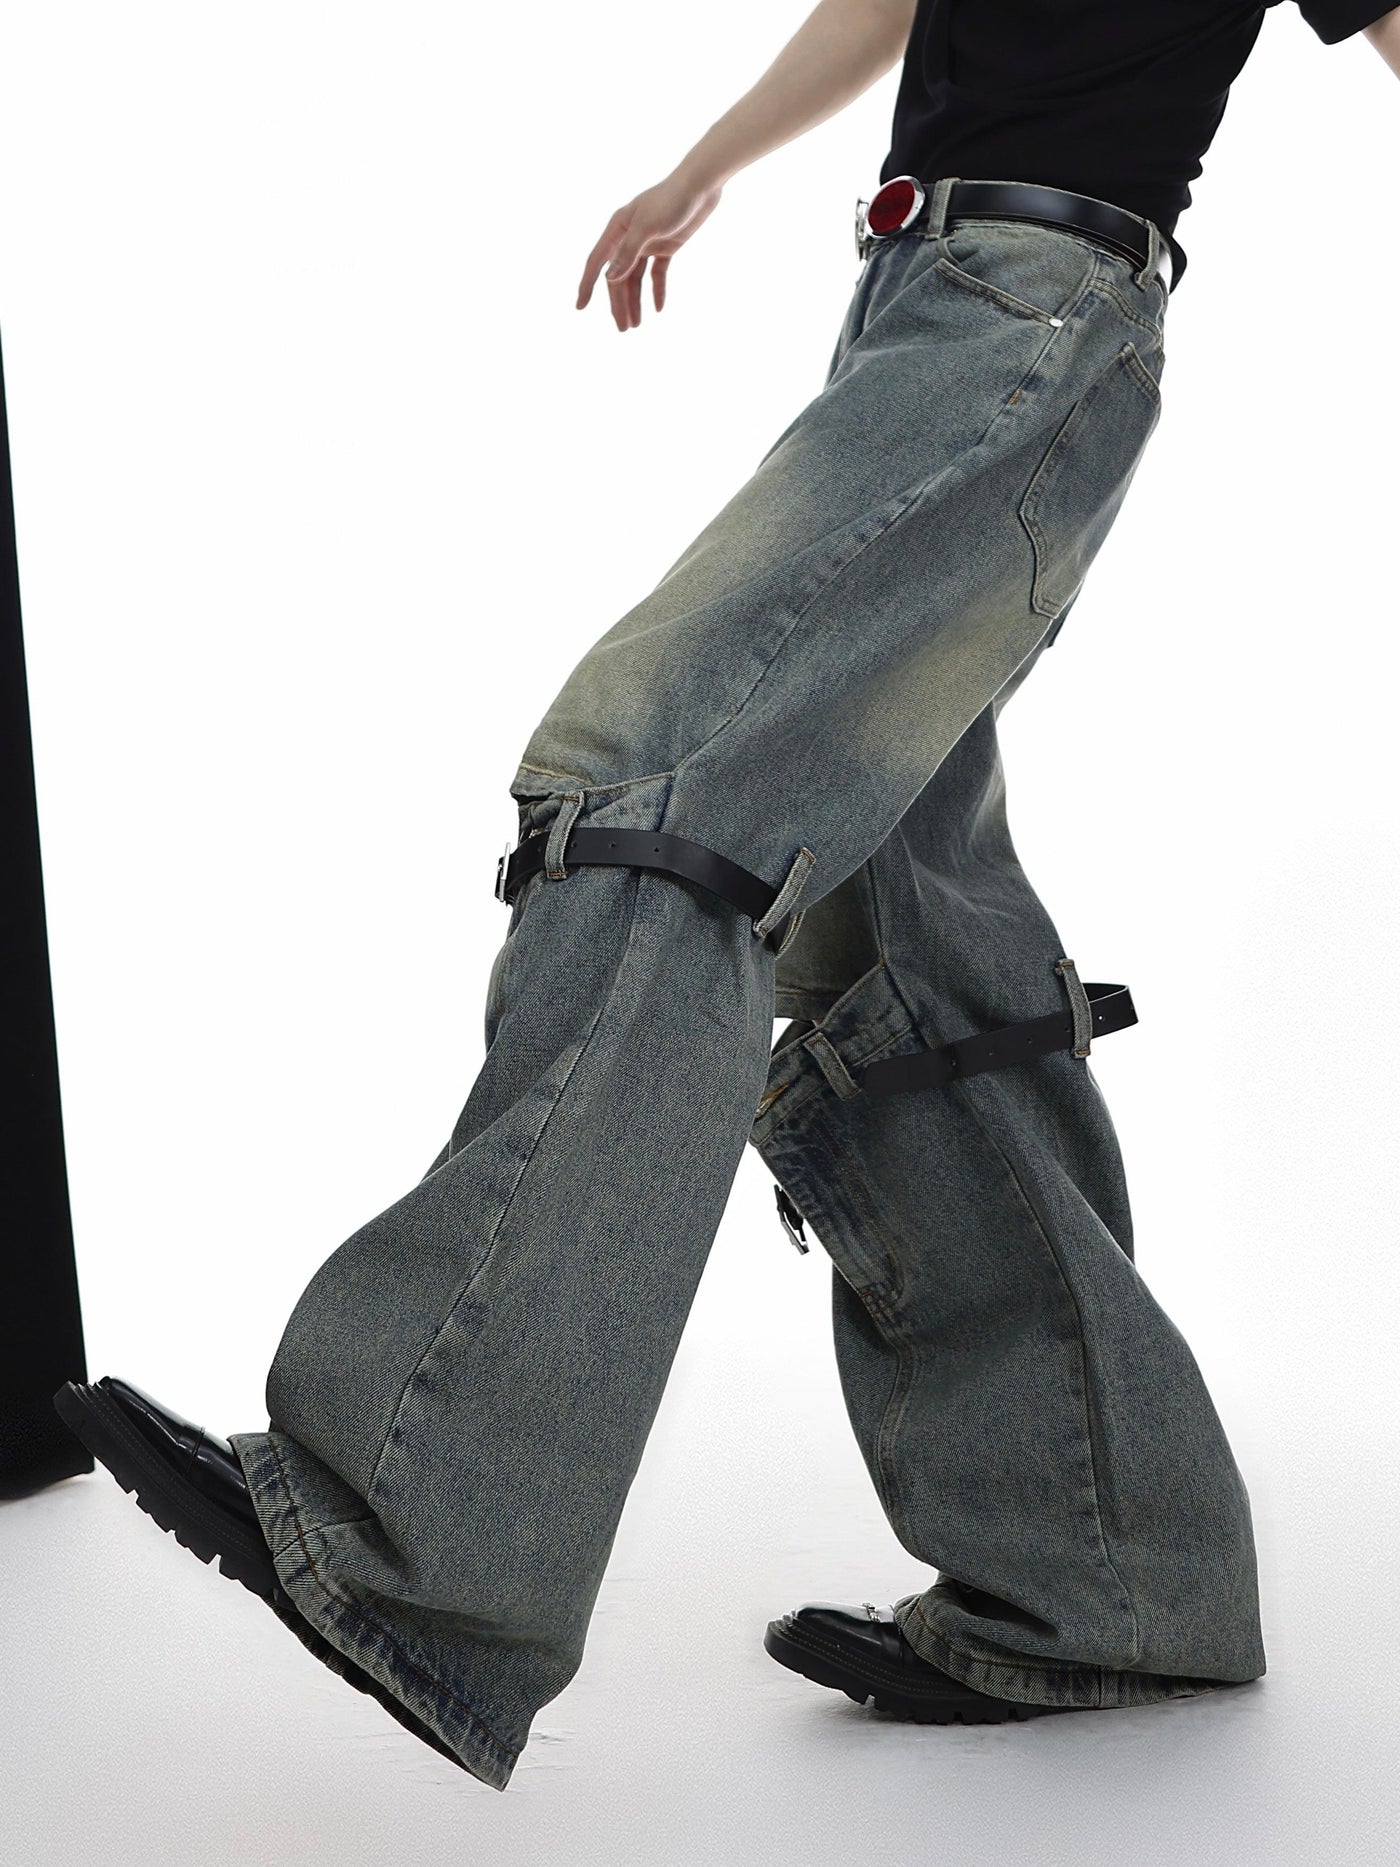 Argue Culture Washed Knee Buckle Belt Jeans Korean Street Fashion Jeans By Argue Culture Shop Online at OH Vault